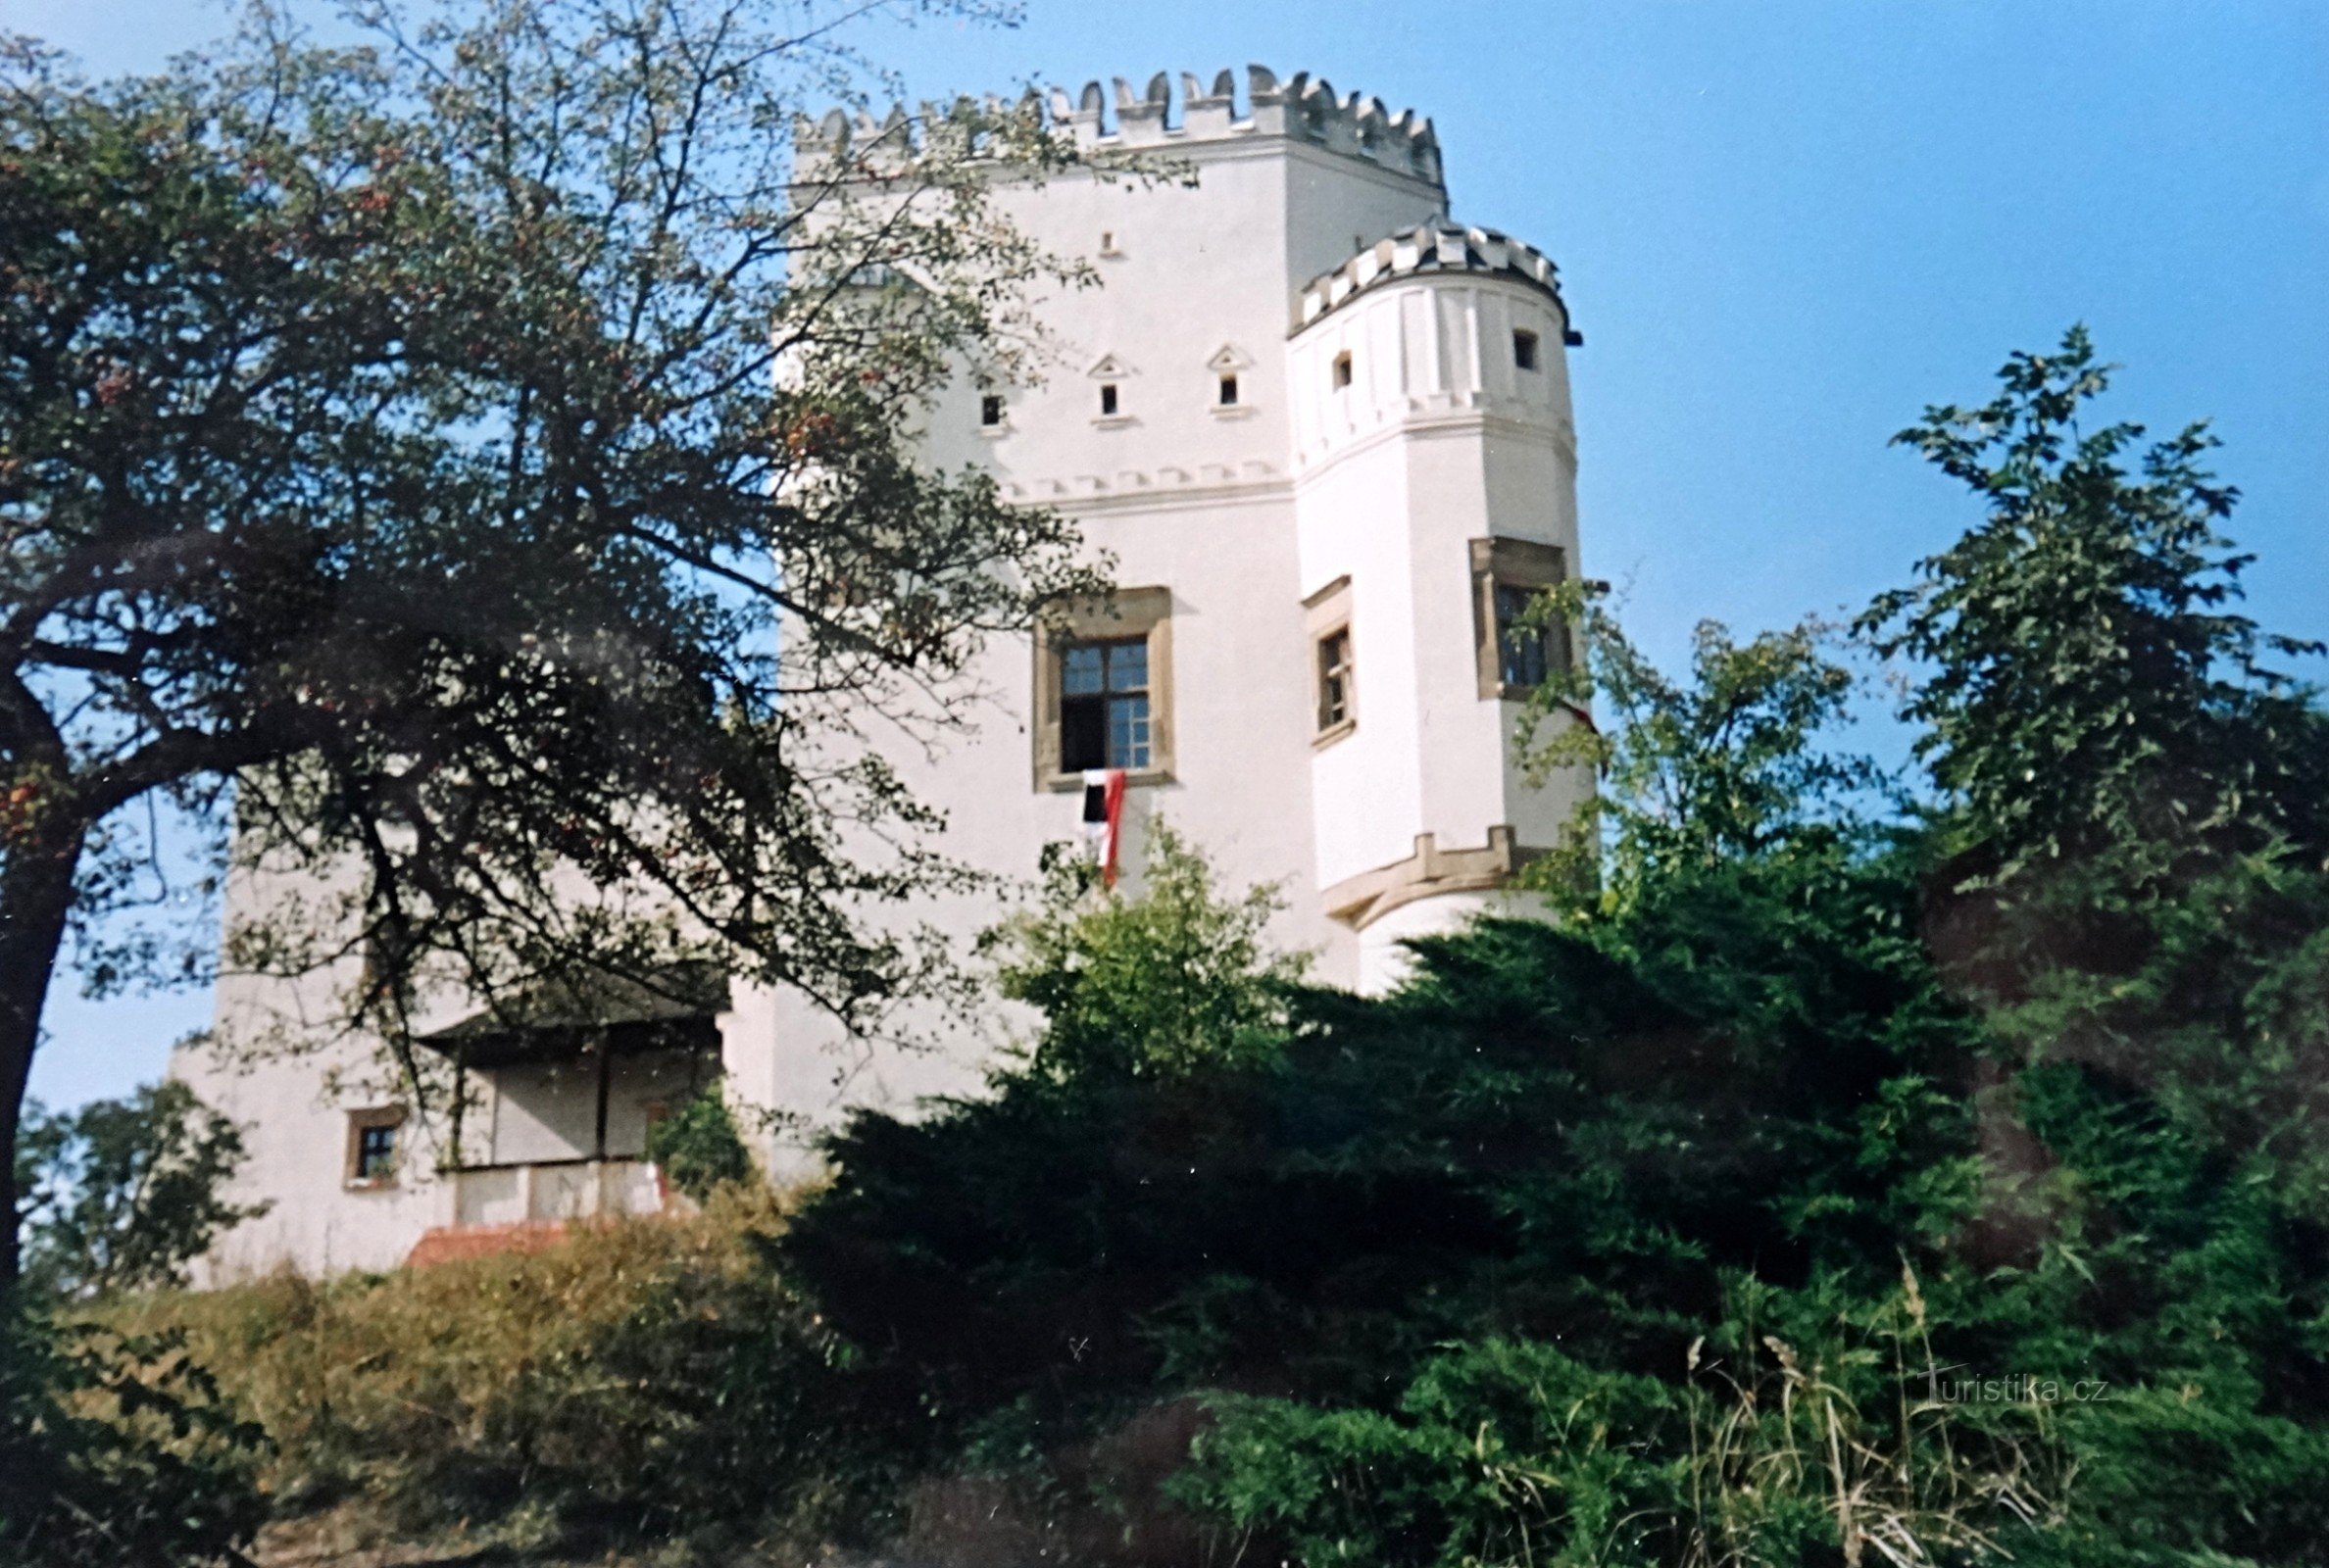 New Castles near Nesovice castle